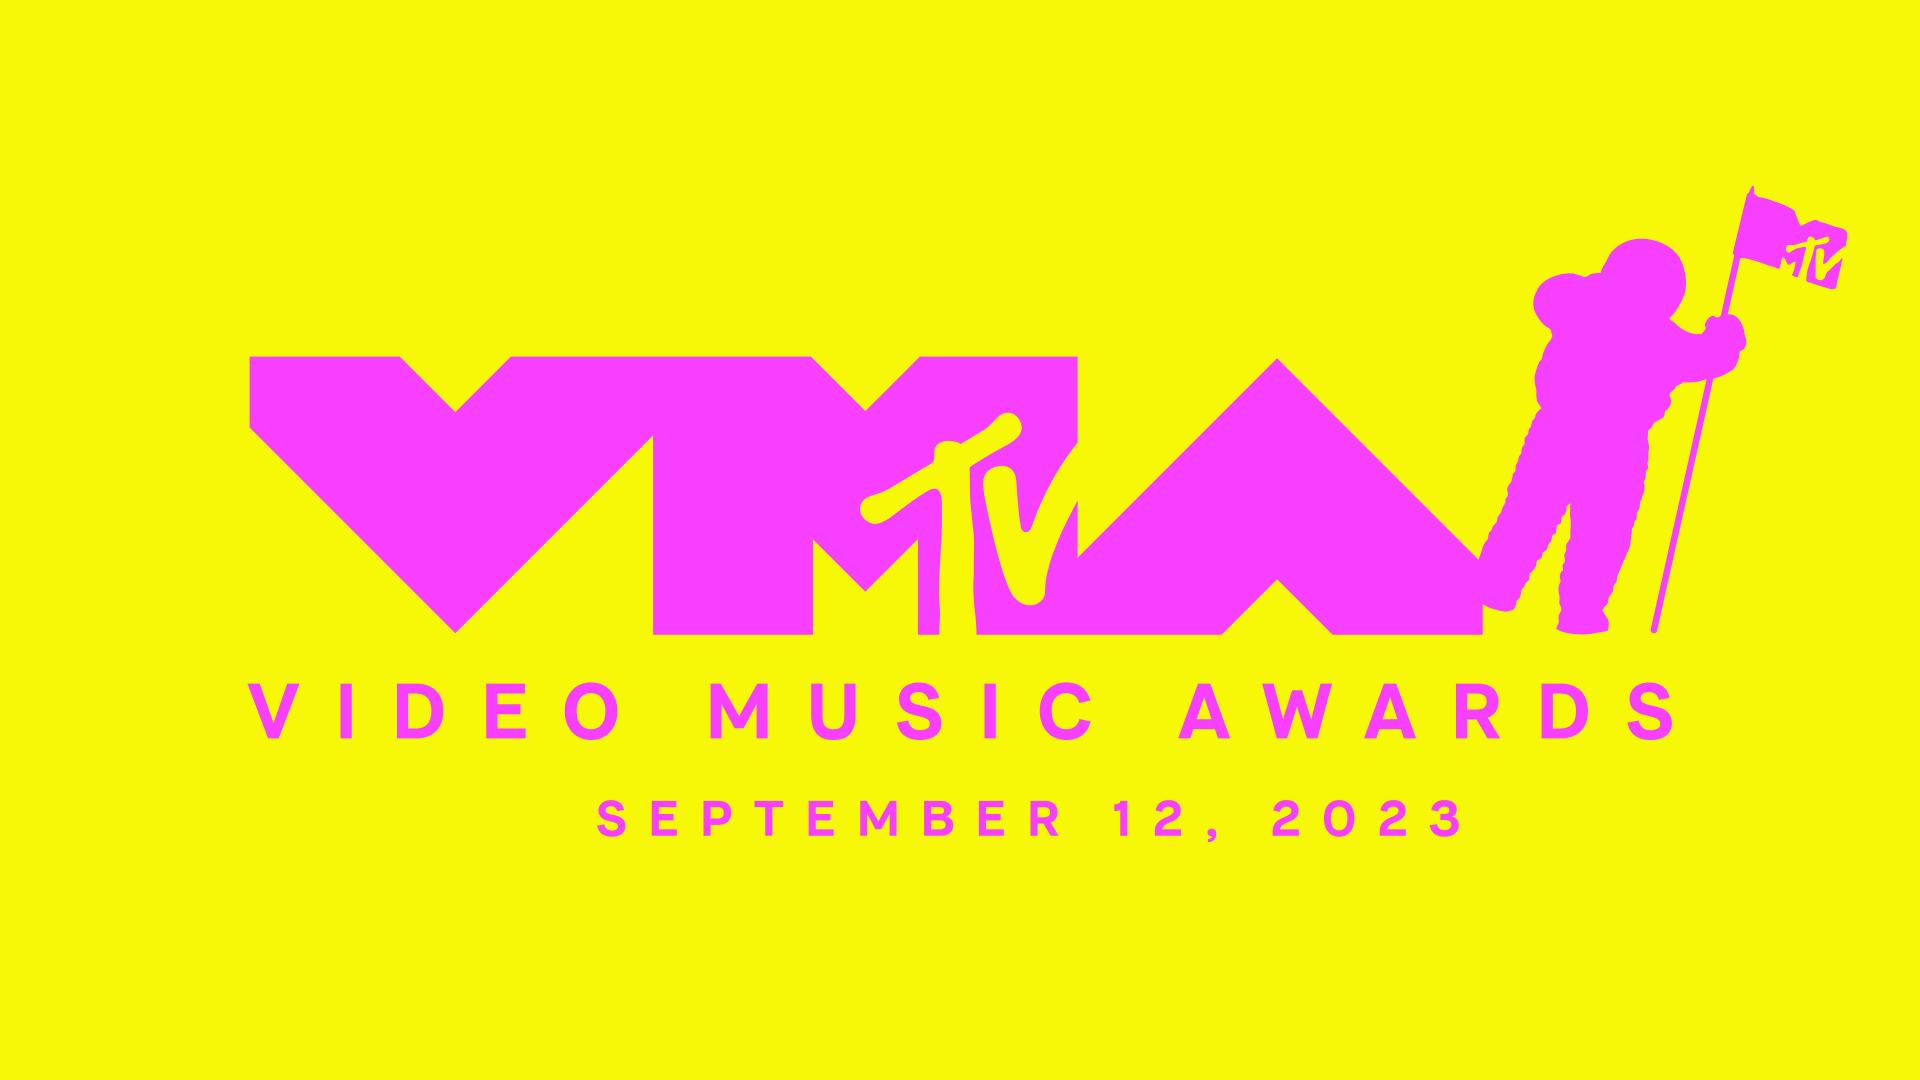 MTV VMAs nominaties bekend, o.a. Blink-182, Fall Out Boy & Paramore genomineerd